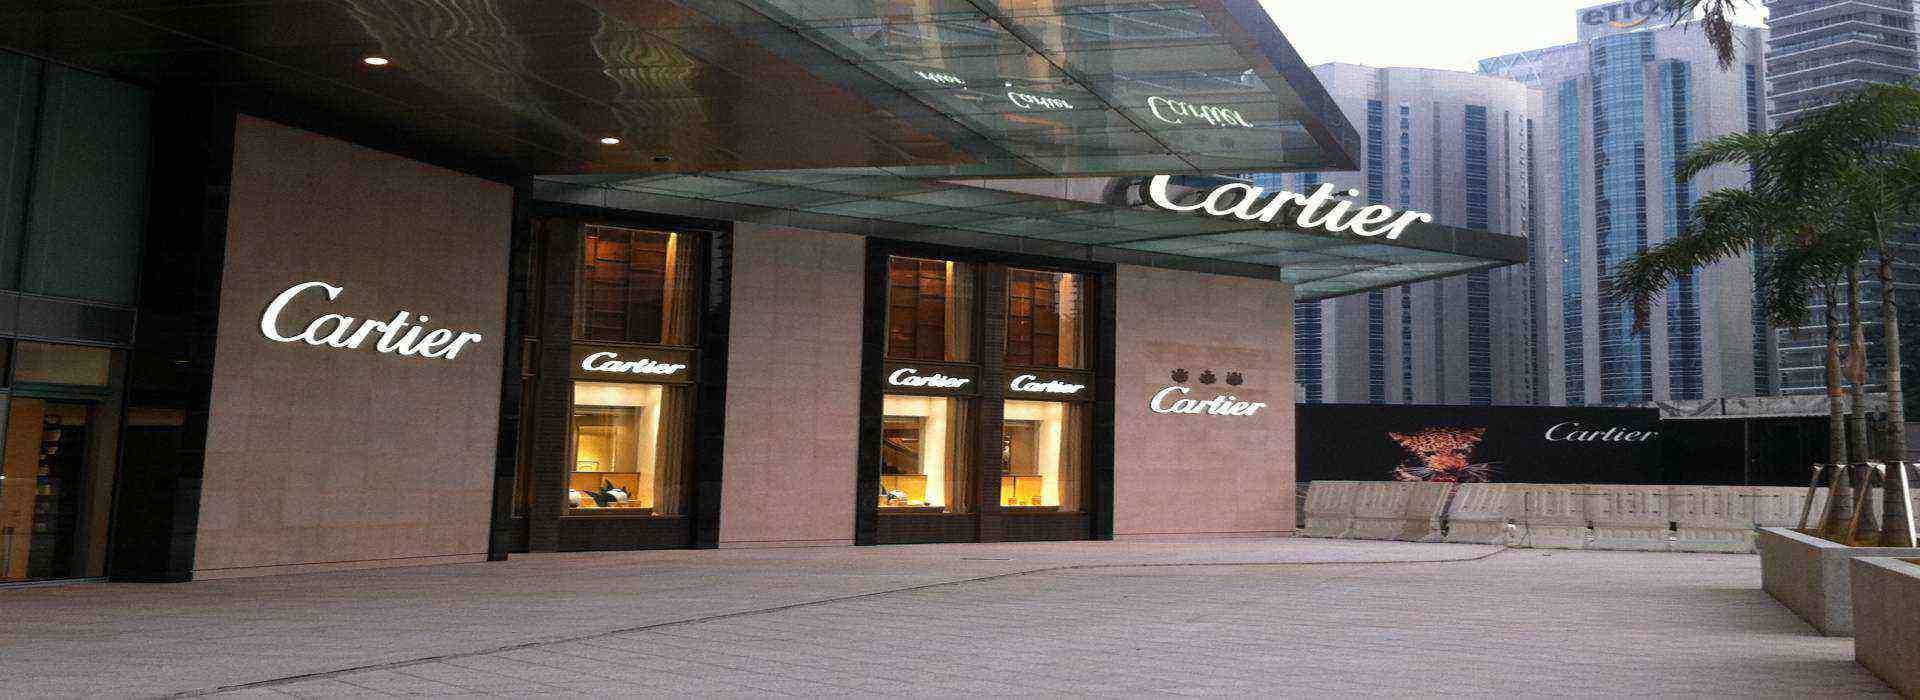 Cartier Customer Service Number 